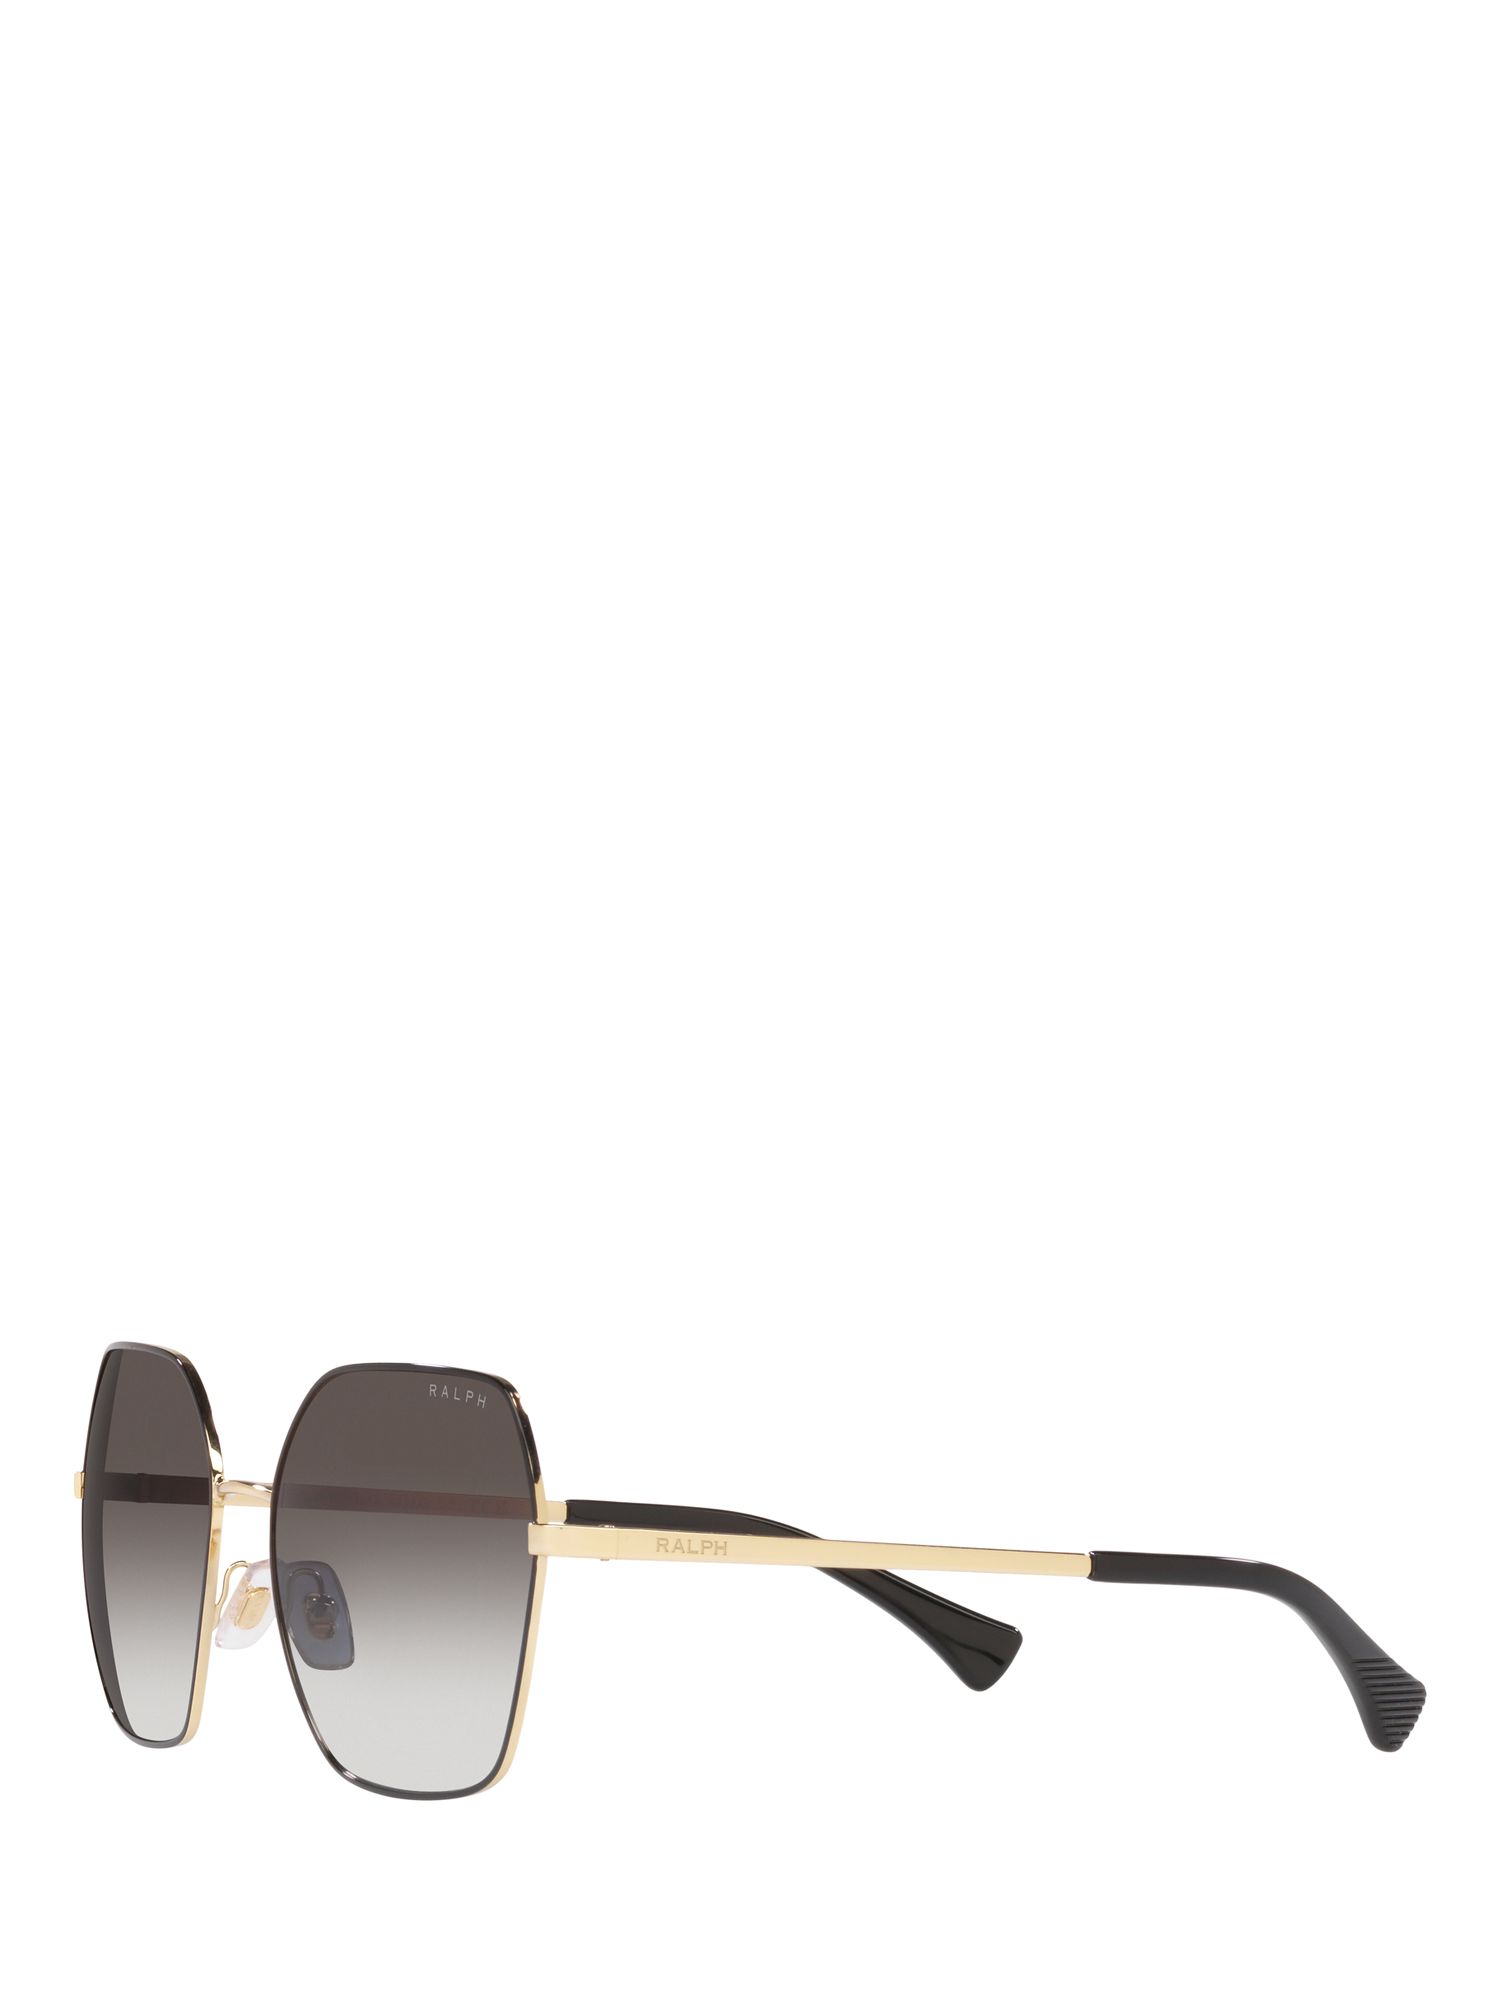 Buy Ralph RA4138 Women's Square Sunglasses, Pale Gold/Grey Gradient Online at johnlewis.com